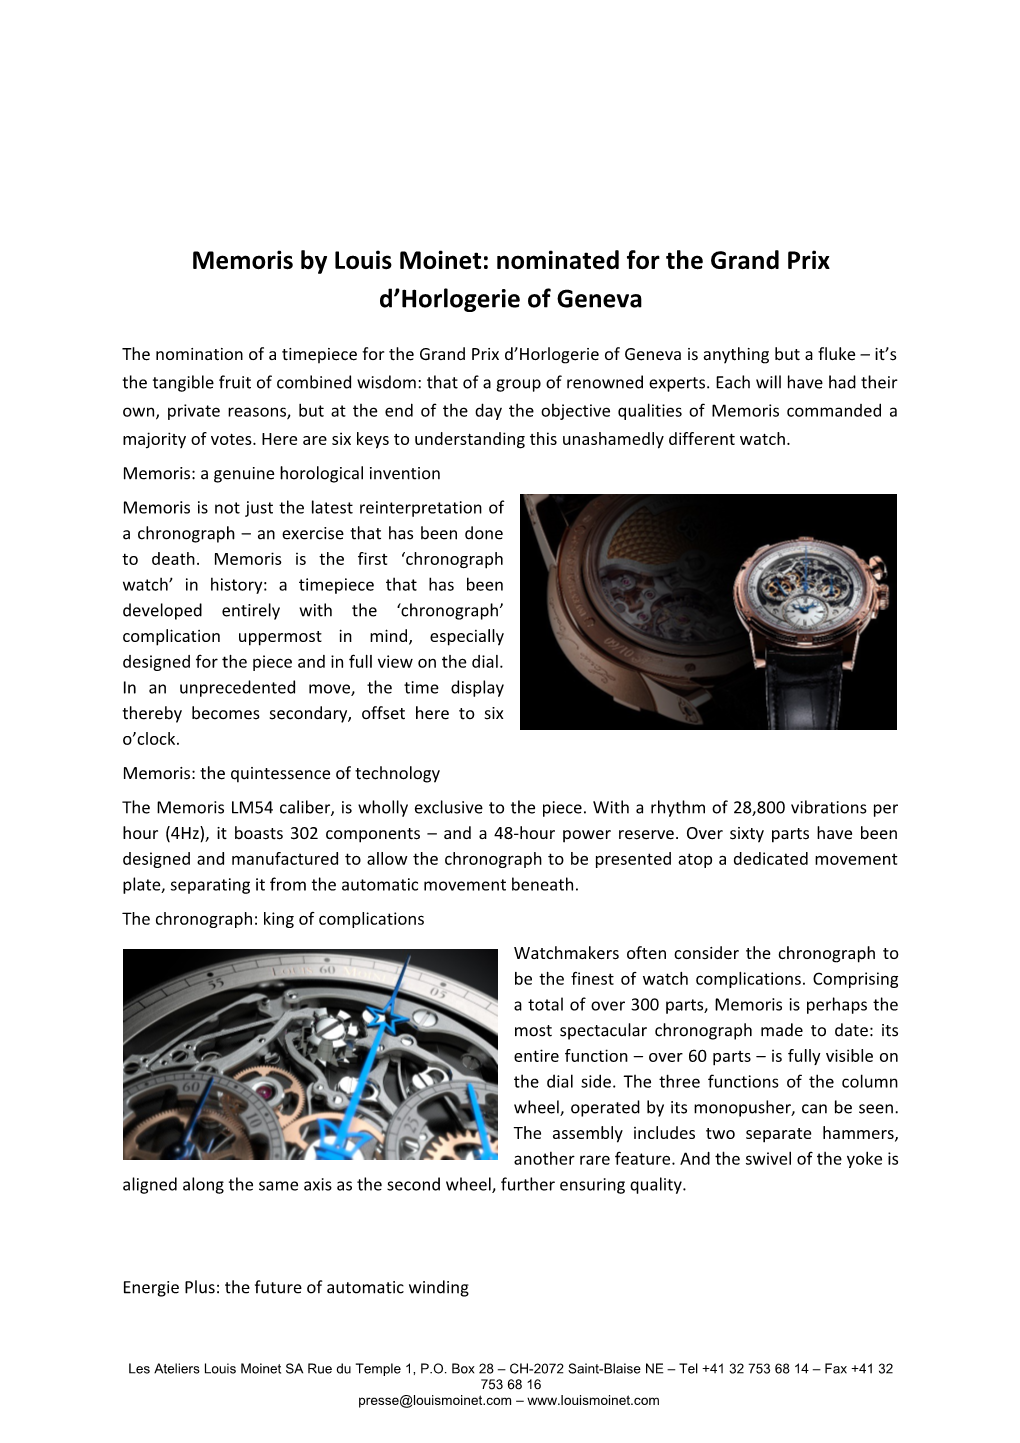 Memoris by Louis Moinet: Nominated for the Grand Prix D Horlogerie of Geneva